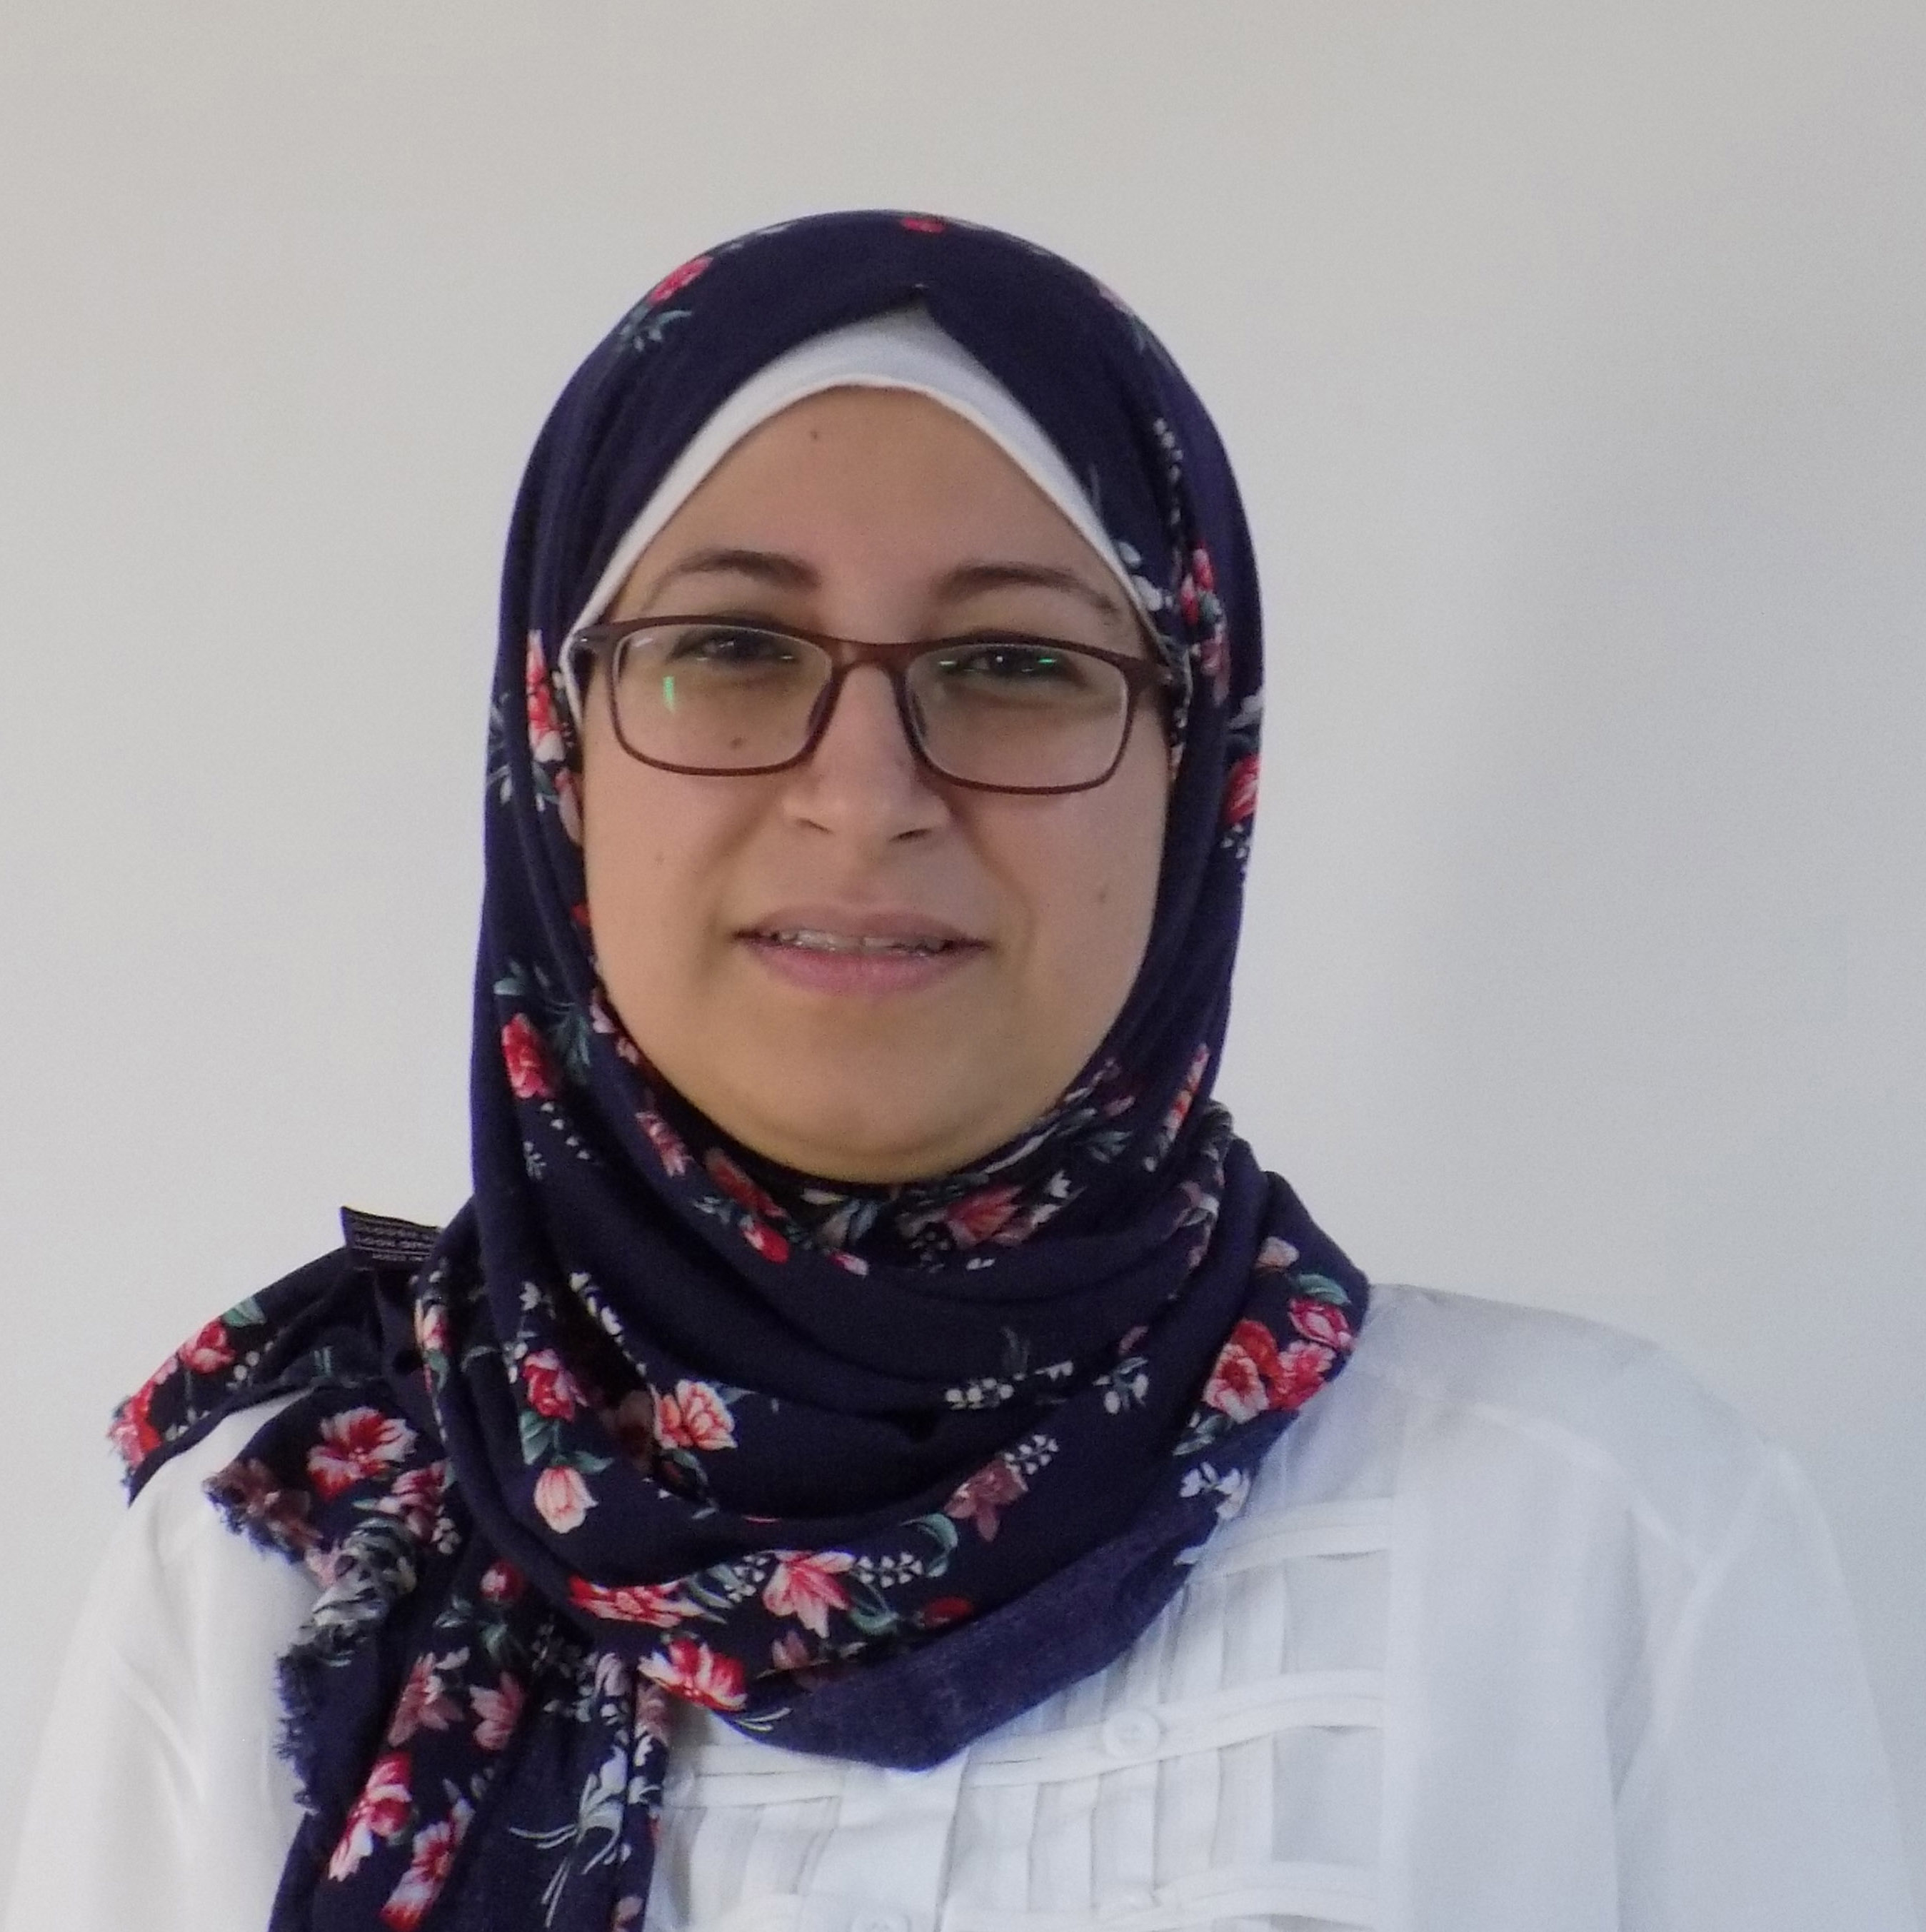 Fatmaelzahraa Ibrahim - Social Worker